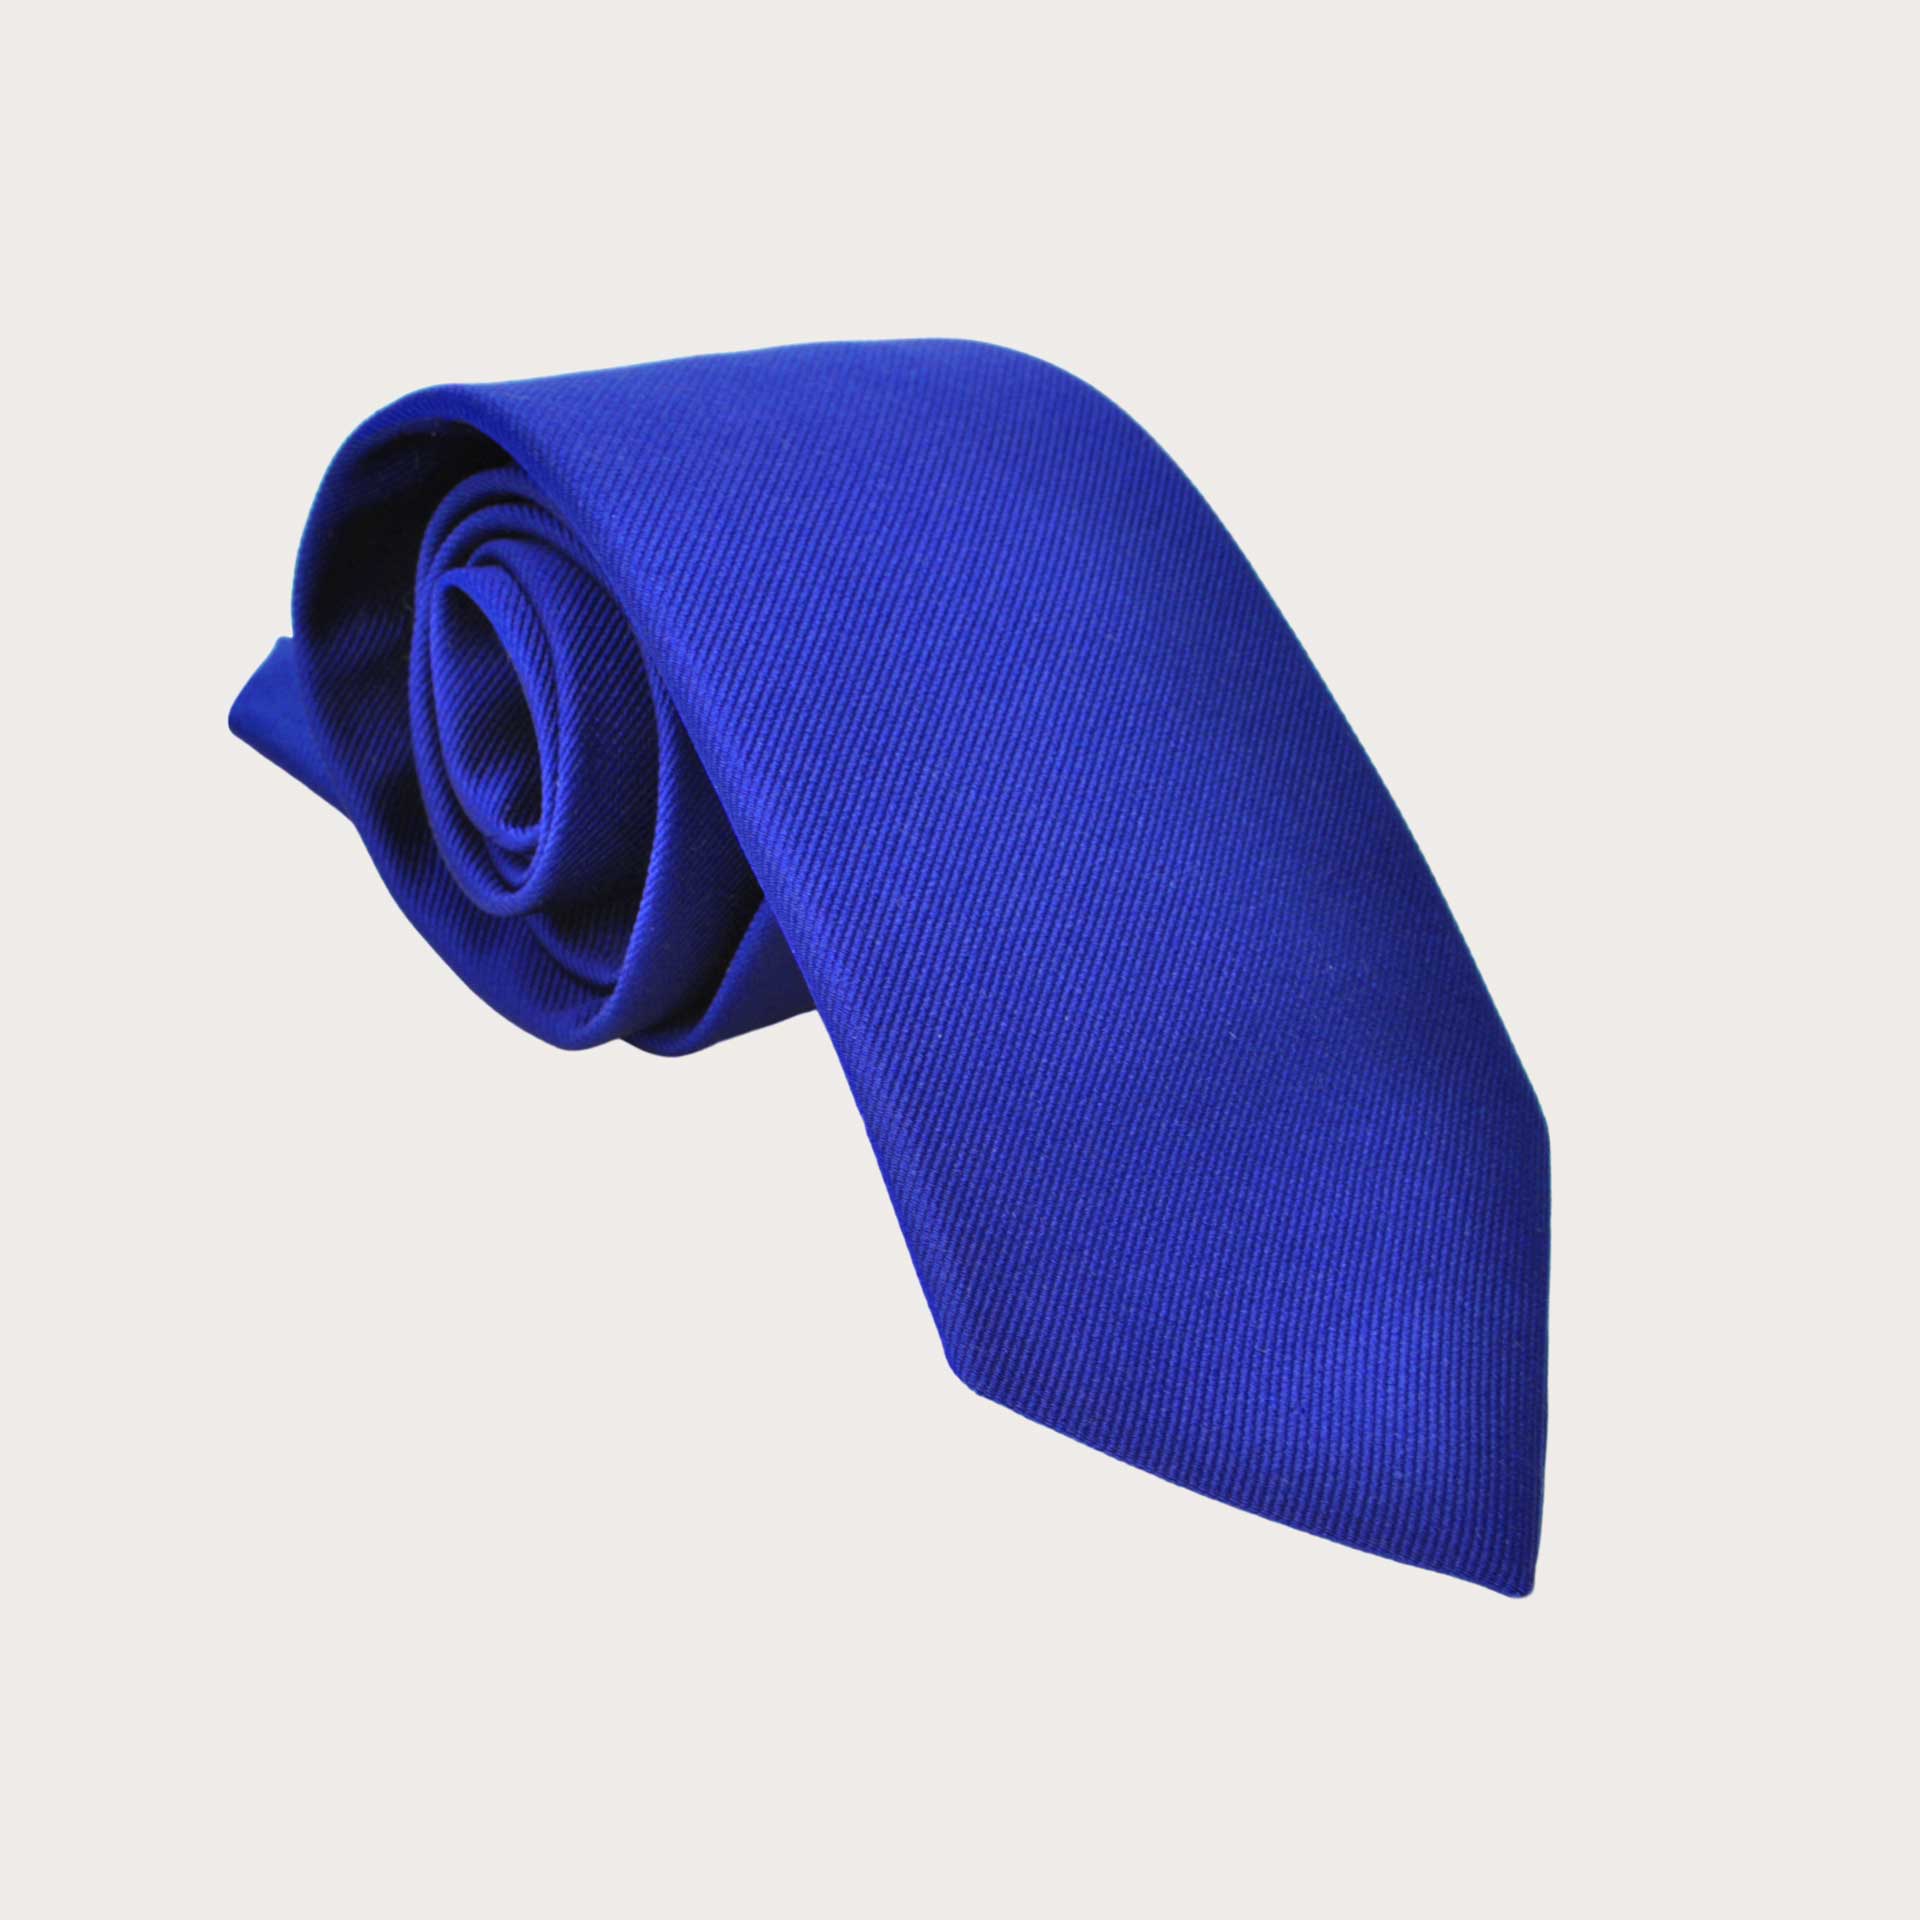 BRUCLE Corbata azul real de seda